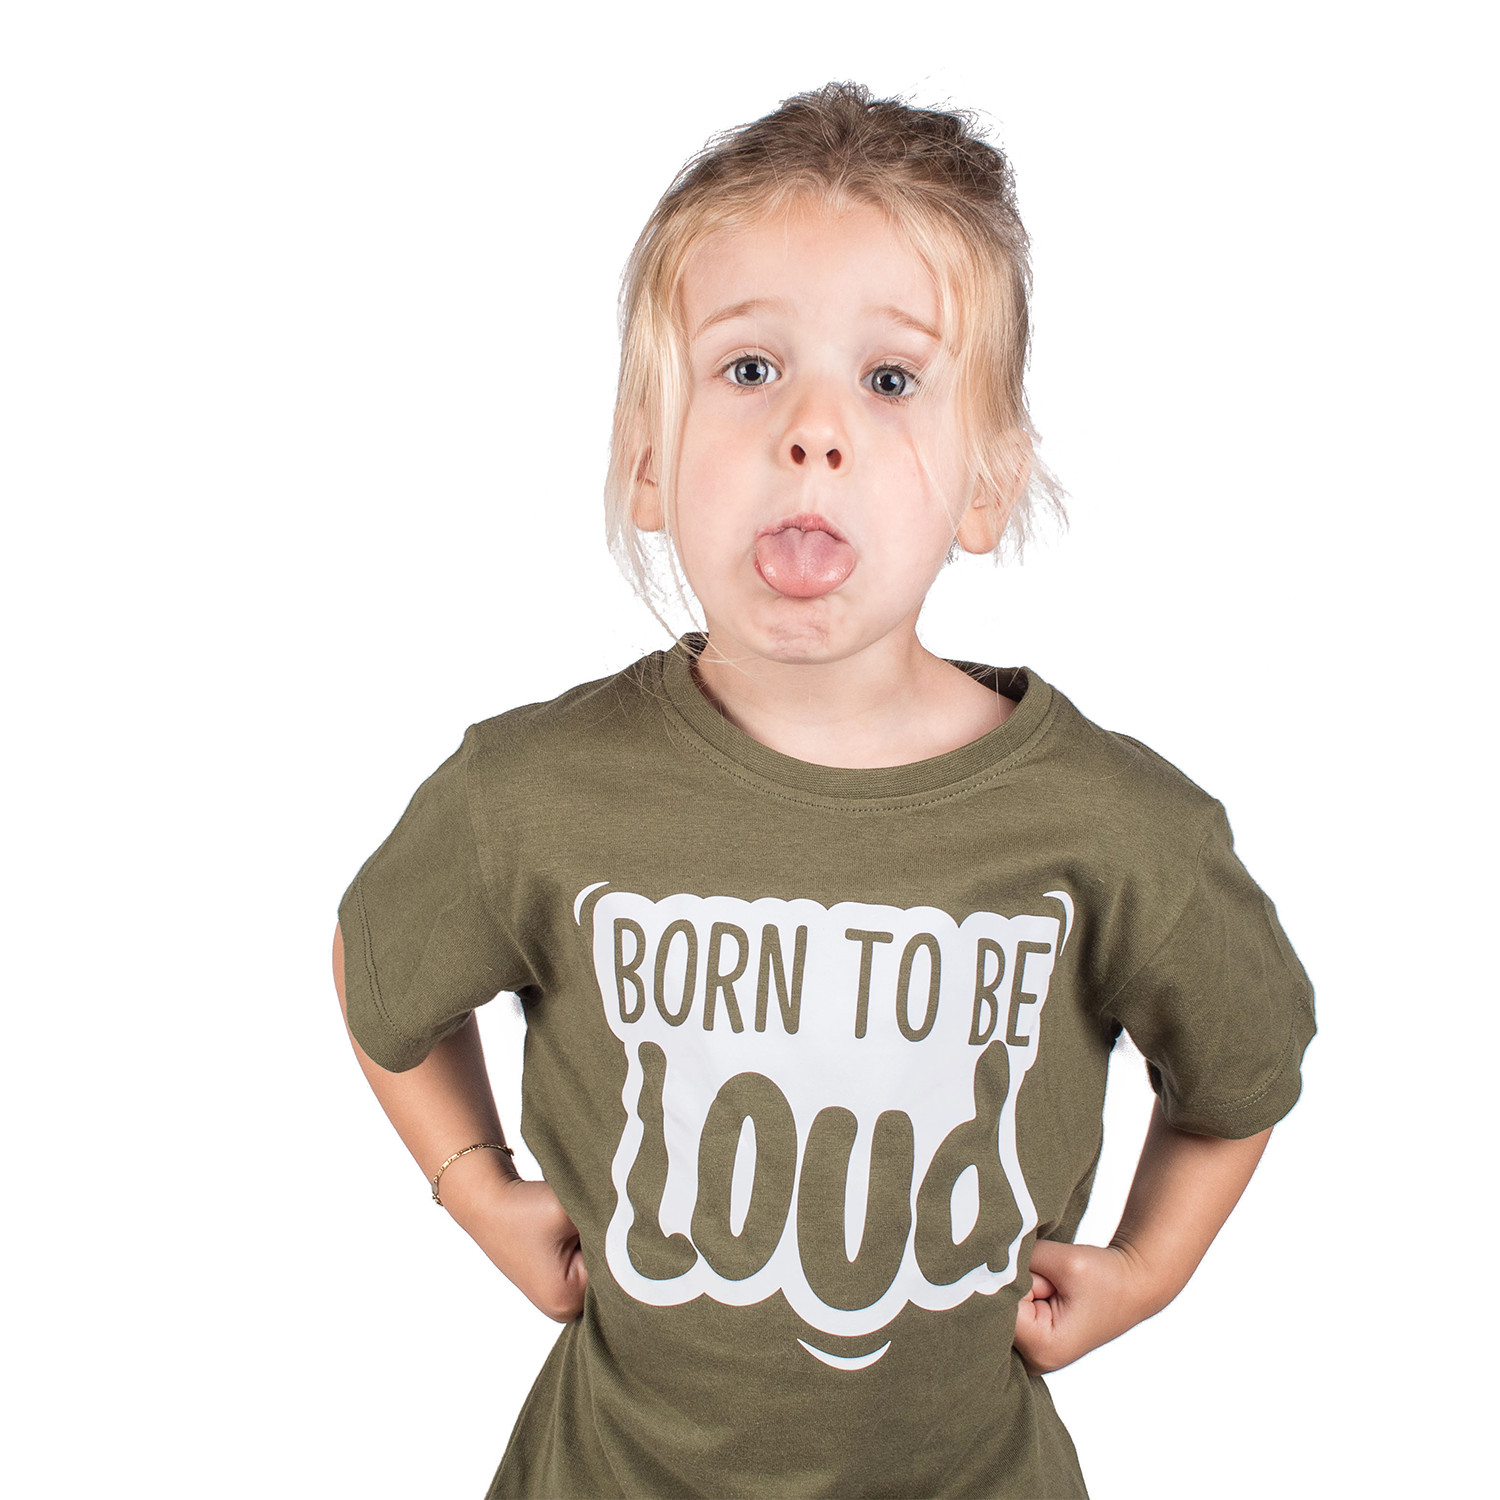 'Born to be loud' kids shortsleeve shirt